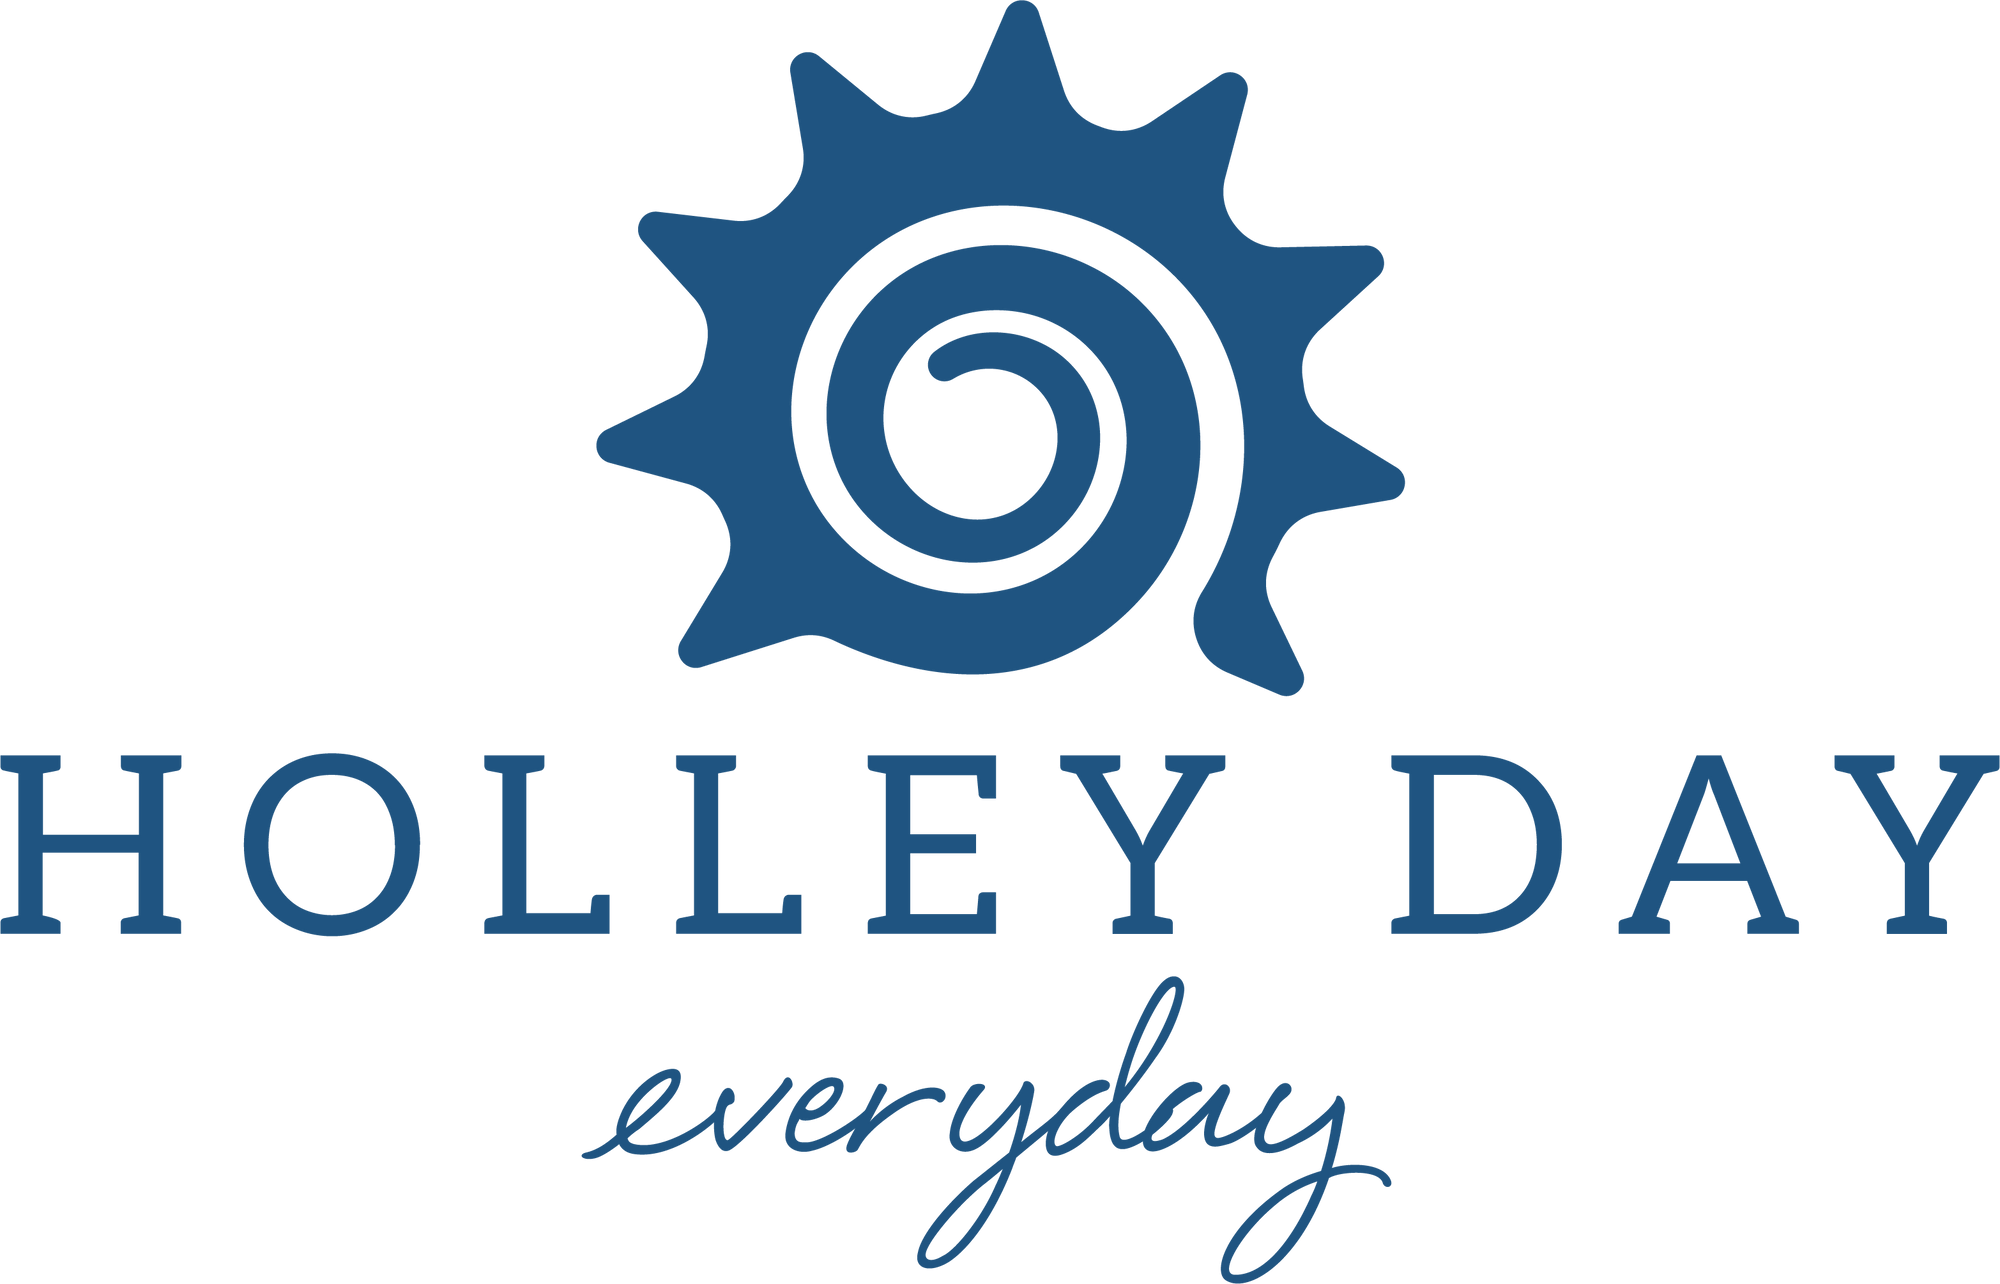 holley-day-everyday-resort-wear-logo